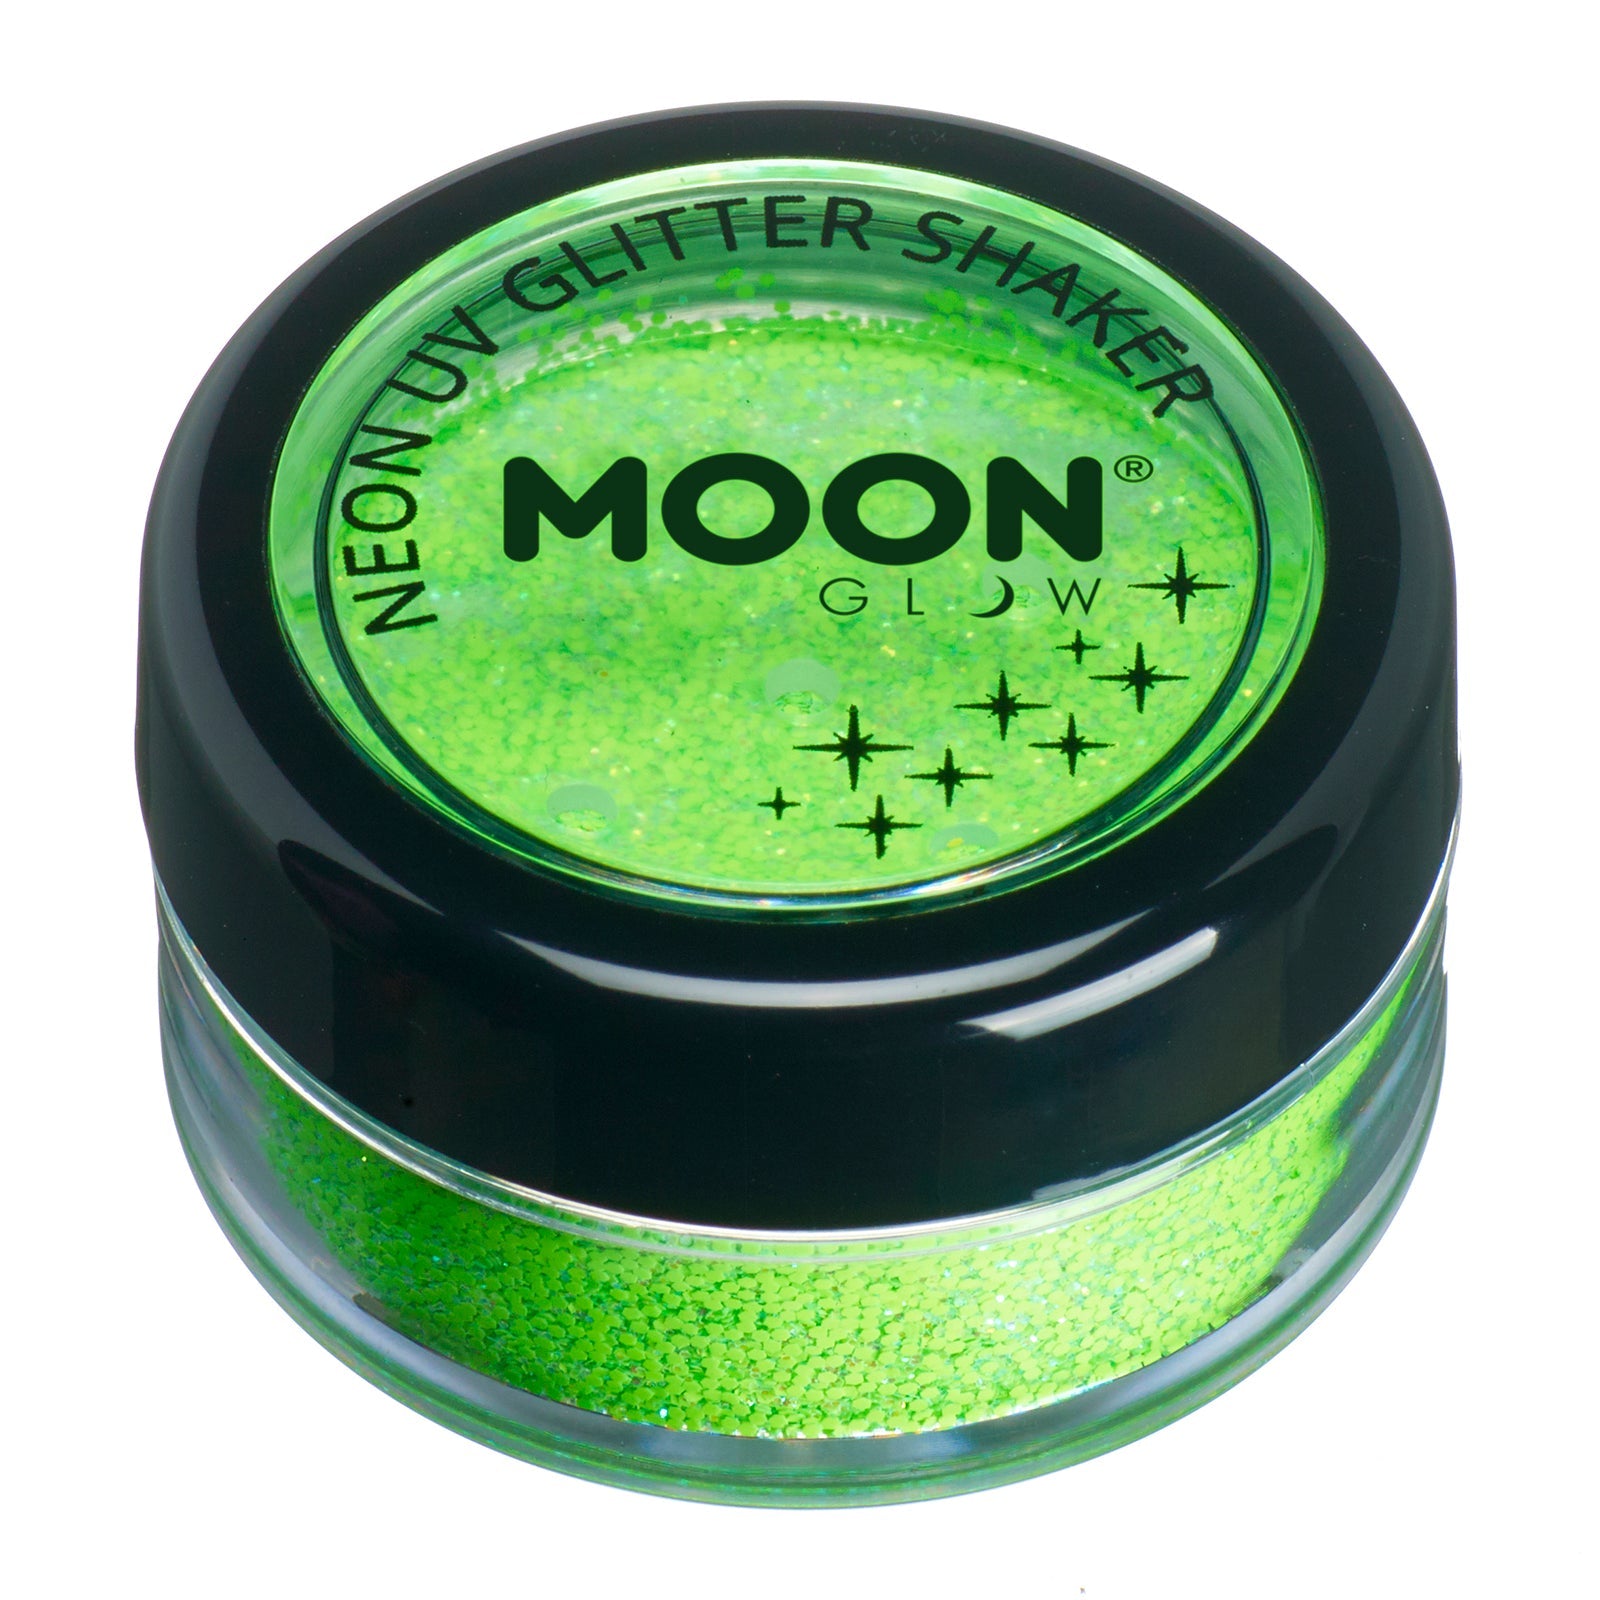 Green - Neon UV Glow Blacklight Fine Face & Body Glitter Shaker, 5g. Cosmetically certified, FDA & Health Canada compliant, cruelty free and vegan.